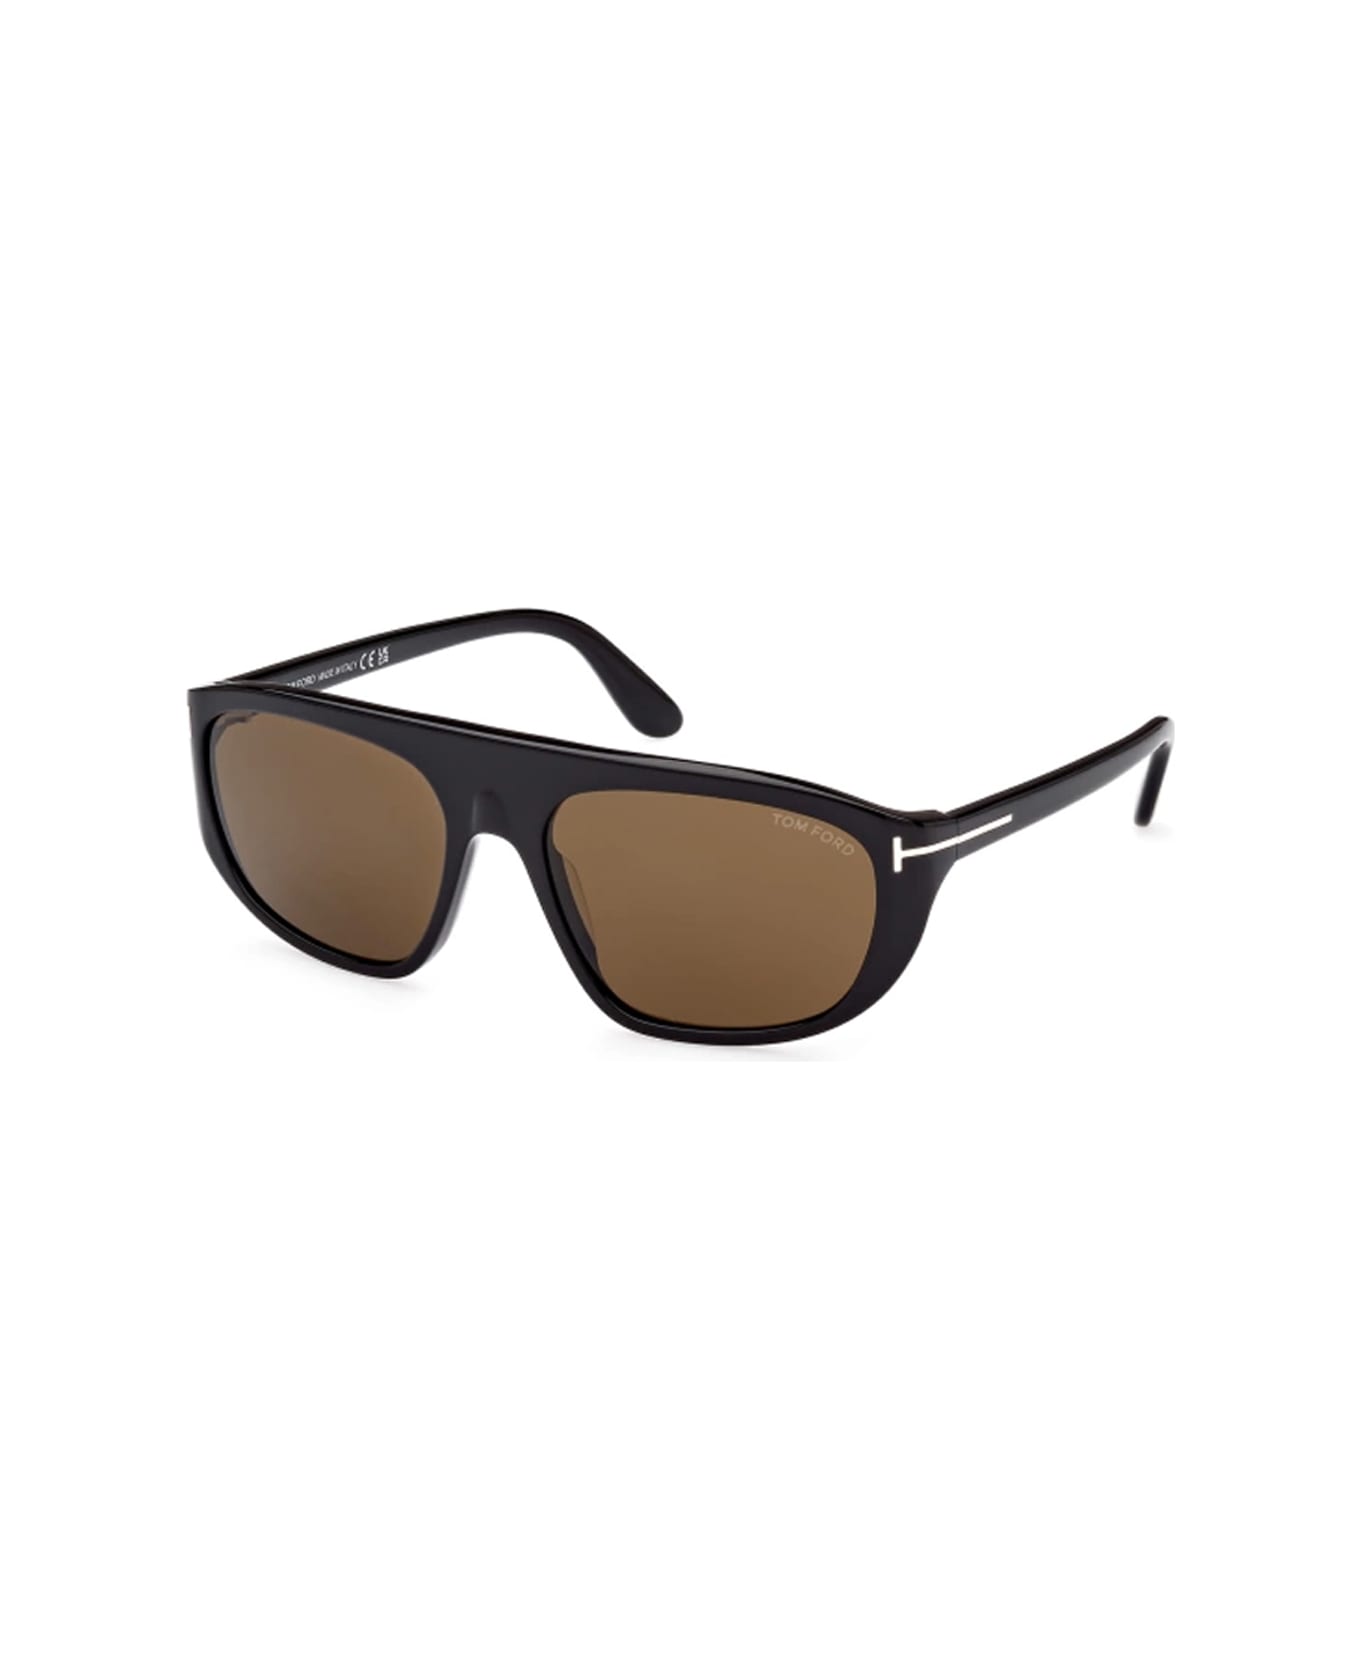 Tom Ford Eyewear Ft1002 Sunglasses - Nero